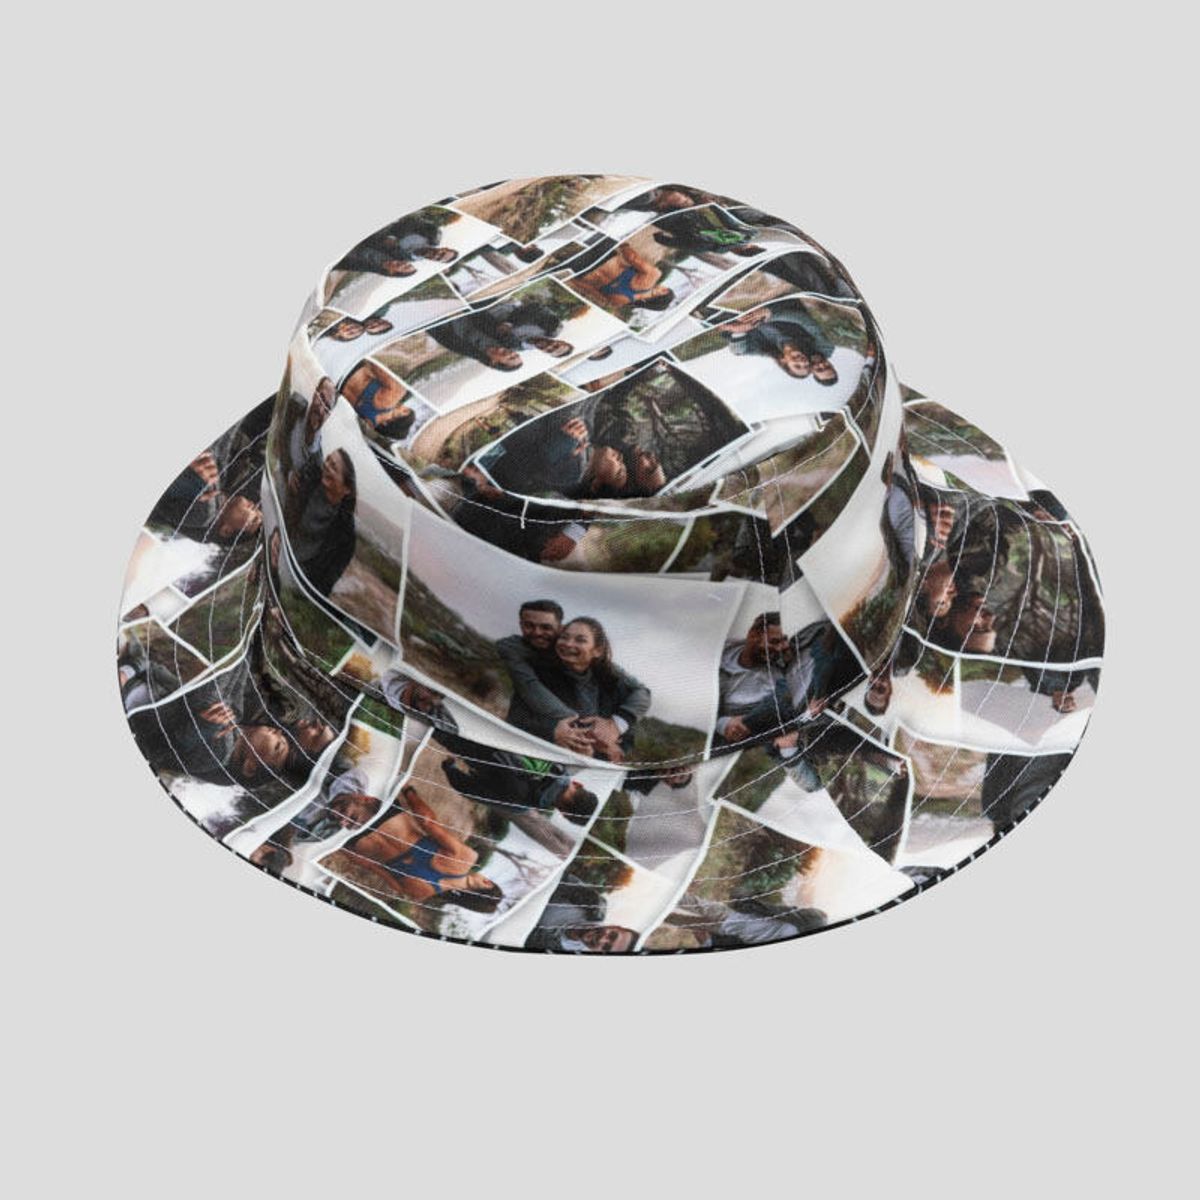 Custom Bucket Hats  Design Your Own Personalized Bucket Hat